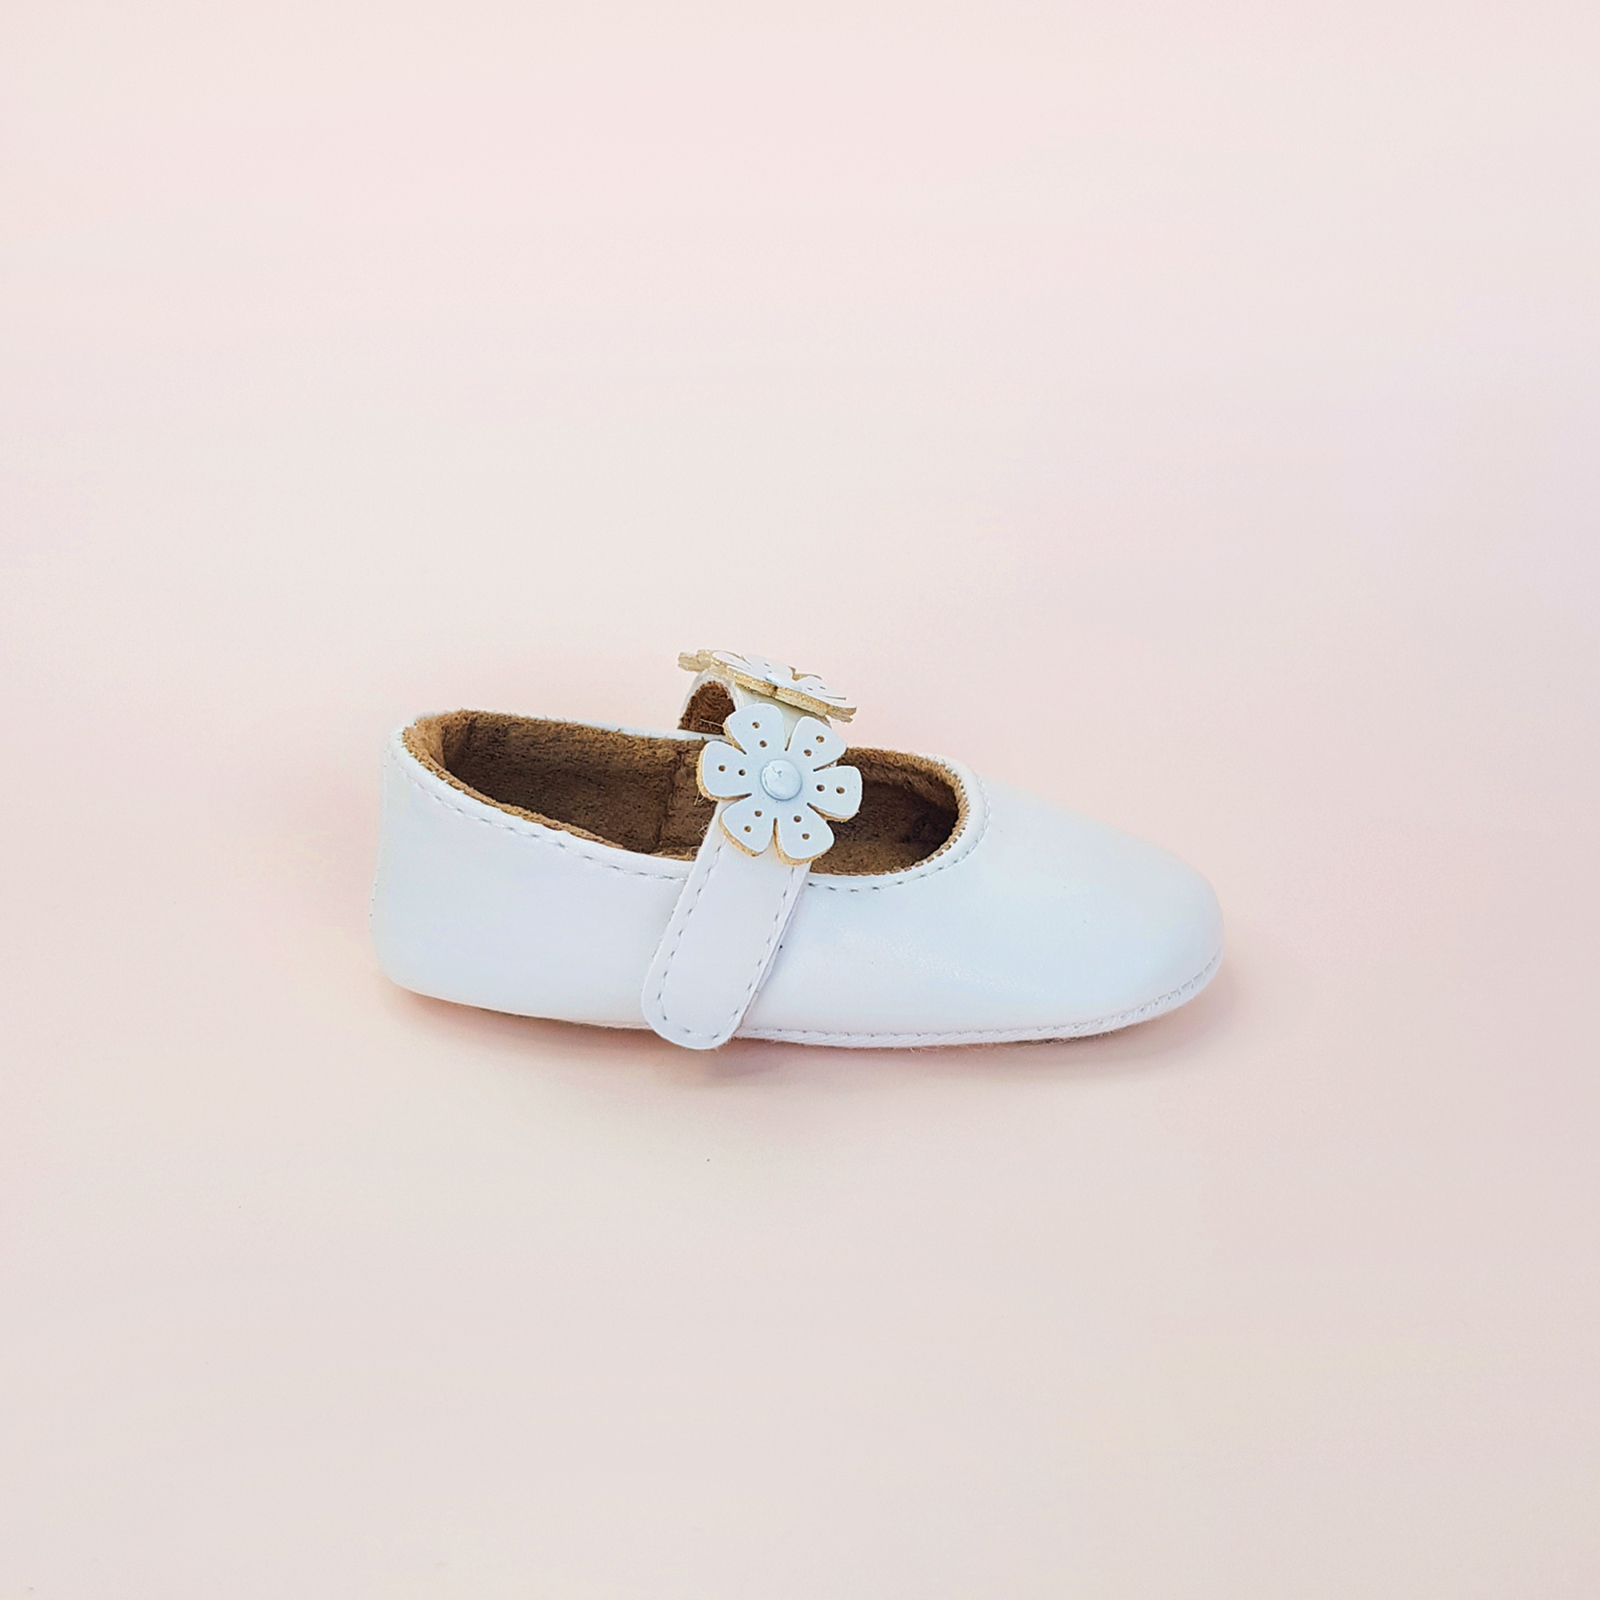 Daisy Ballerina Shoes1600x1600-1.jpg